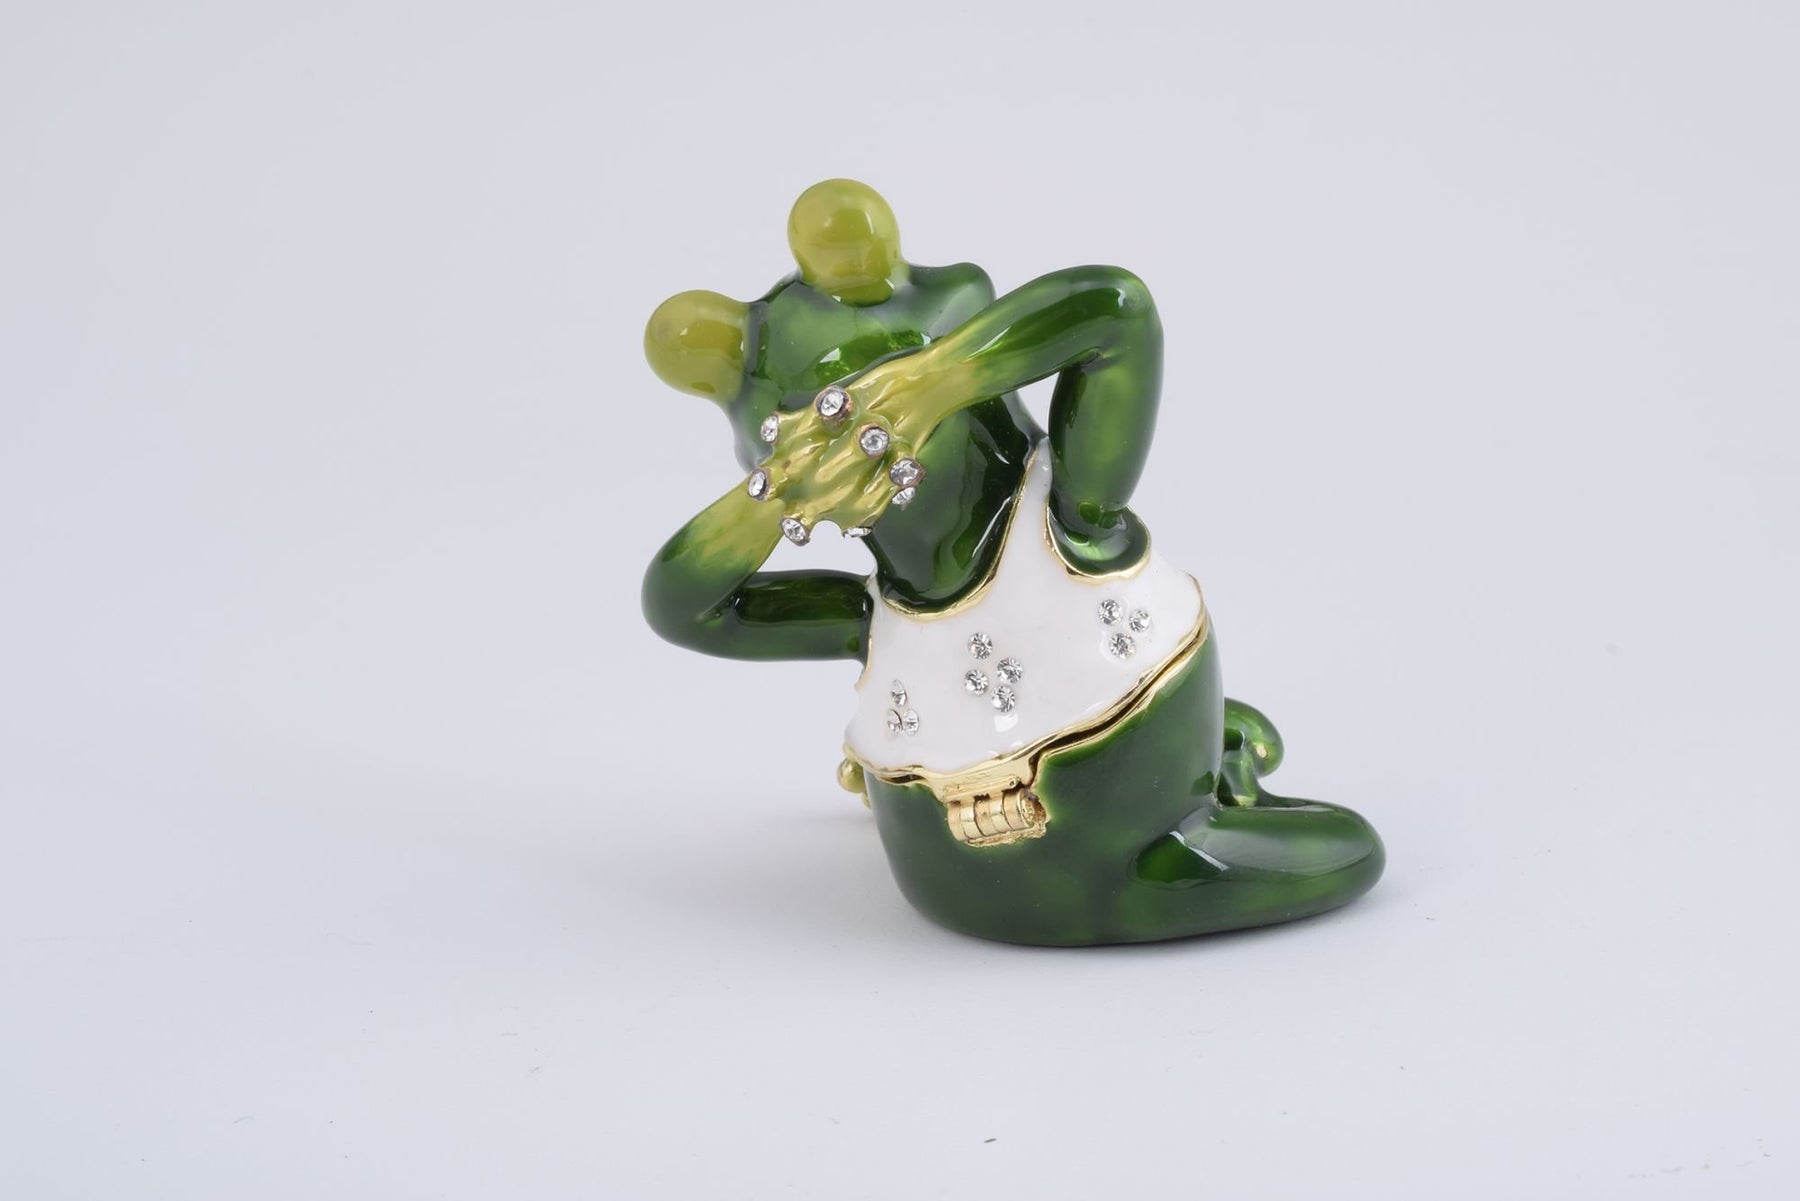 Keren Kopal Gymnastic Frog with a White Shirt  62.62